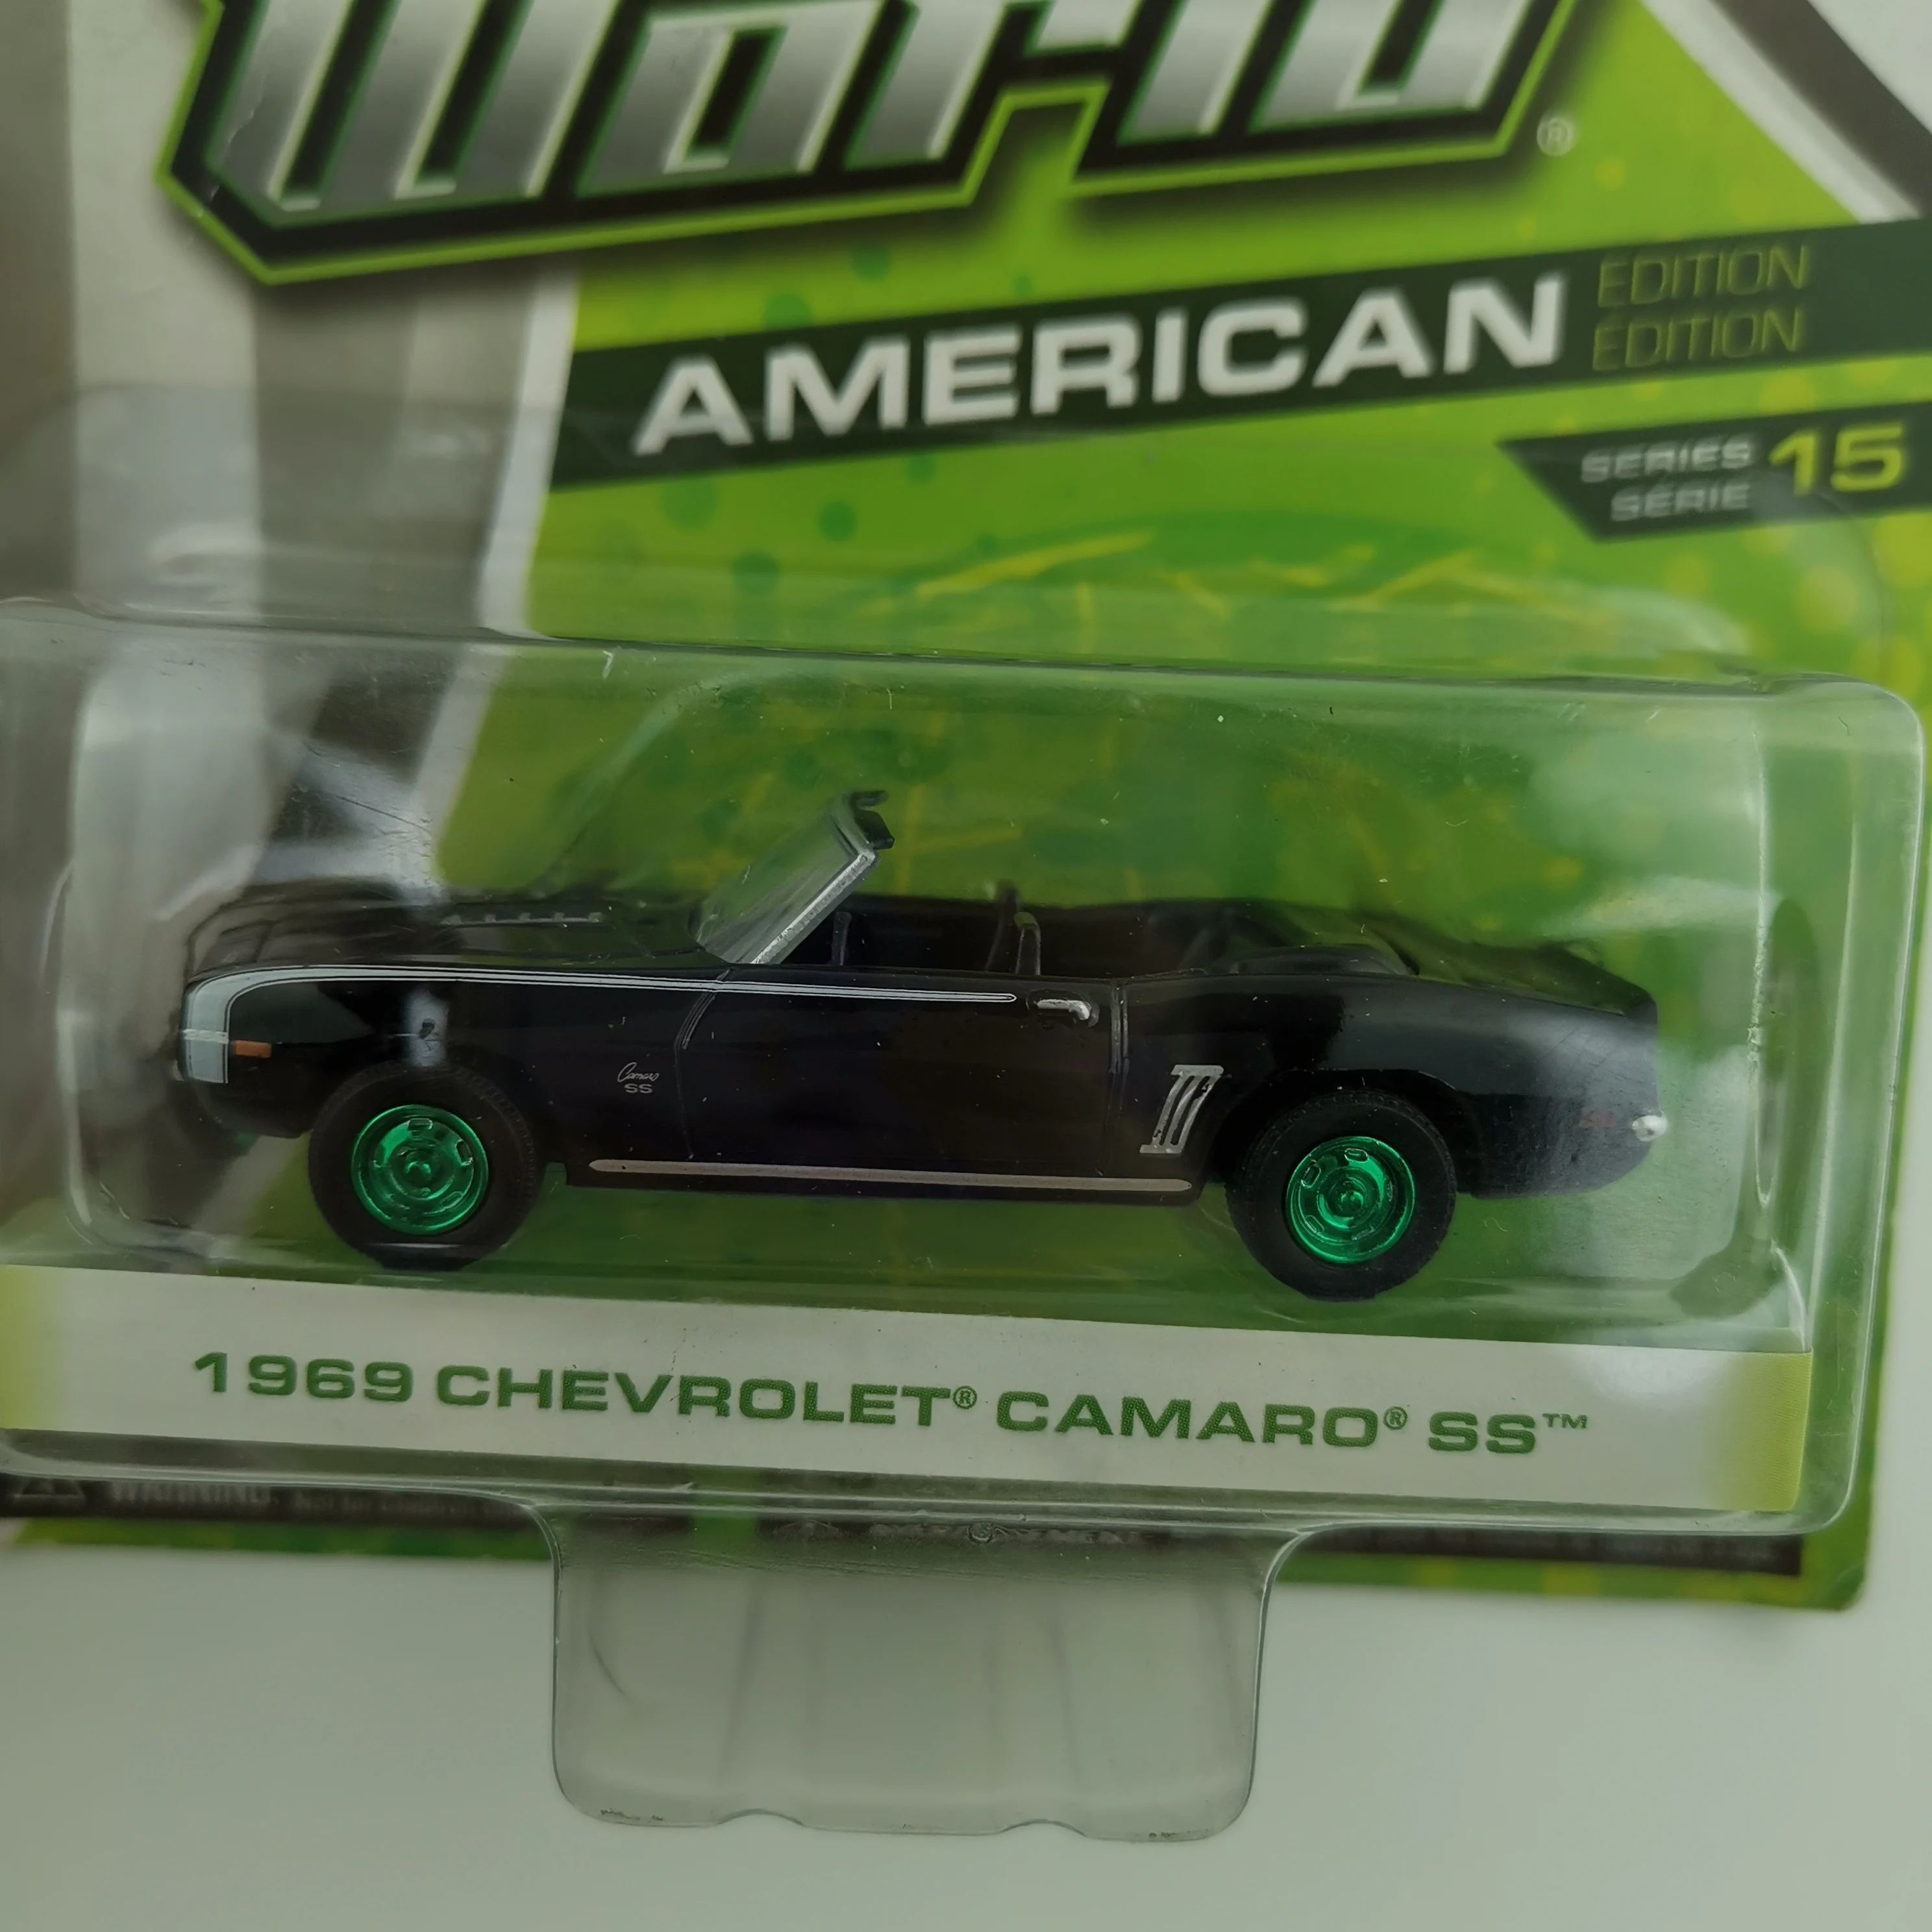 

GreenLight cars 1/64 1969 Chevrolet Camaro AMERICAN EDITION green machine Collector Edition Metal Diecast Model Car